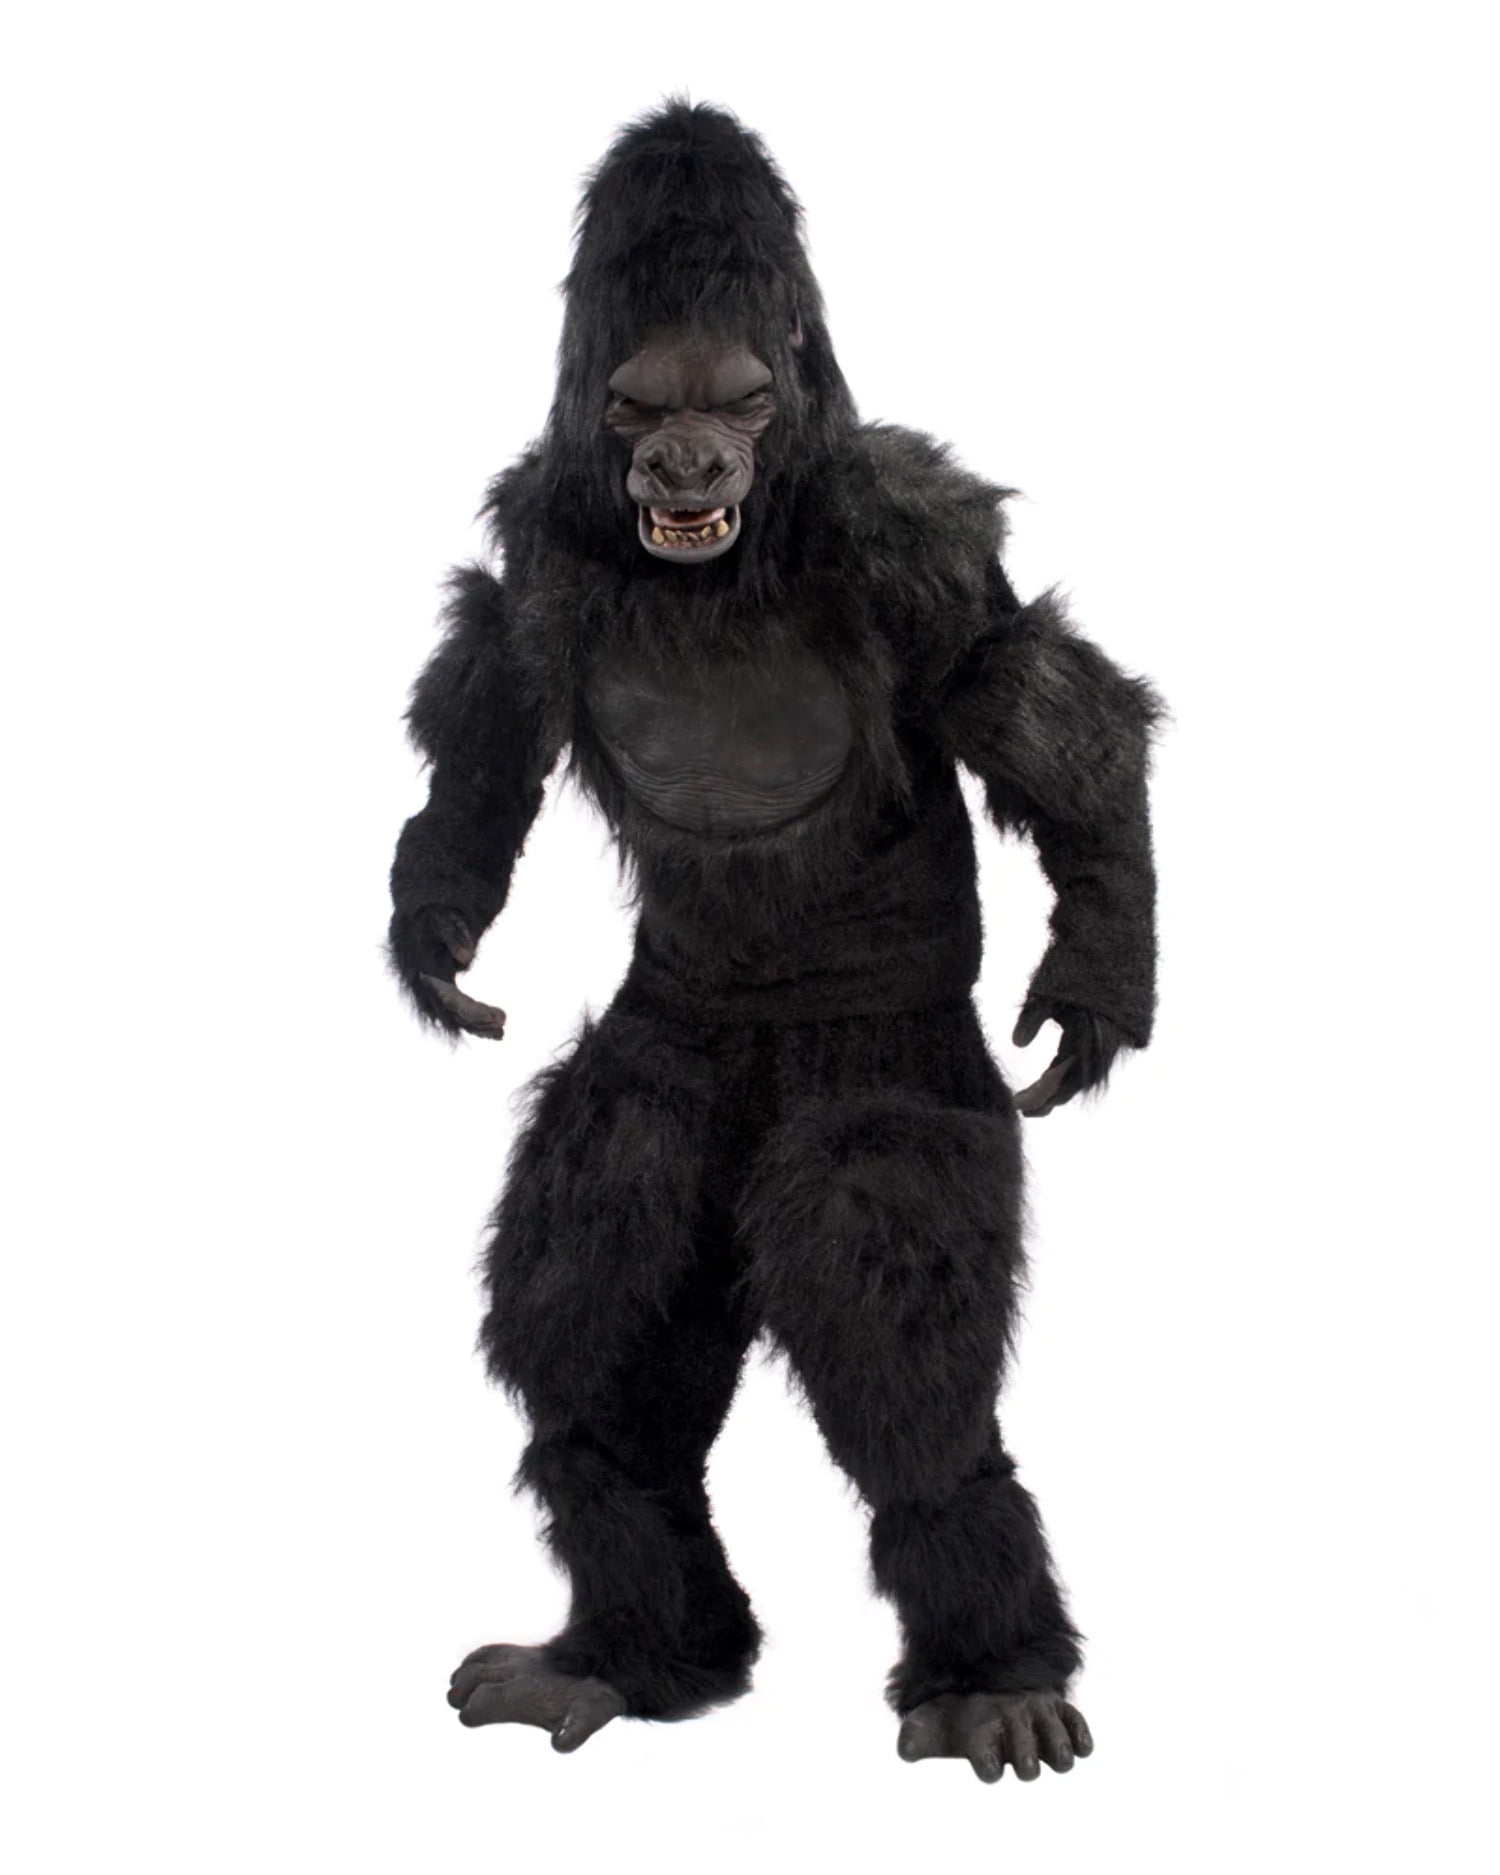 Gorilla Black Chimp Monkey Ape Shoe Covers Halloween Costume Feet Accessories Shoe Covers